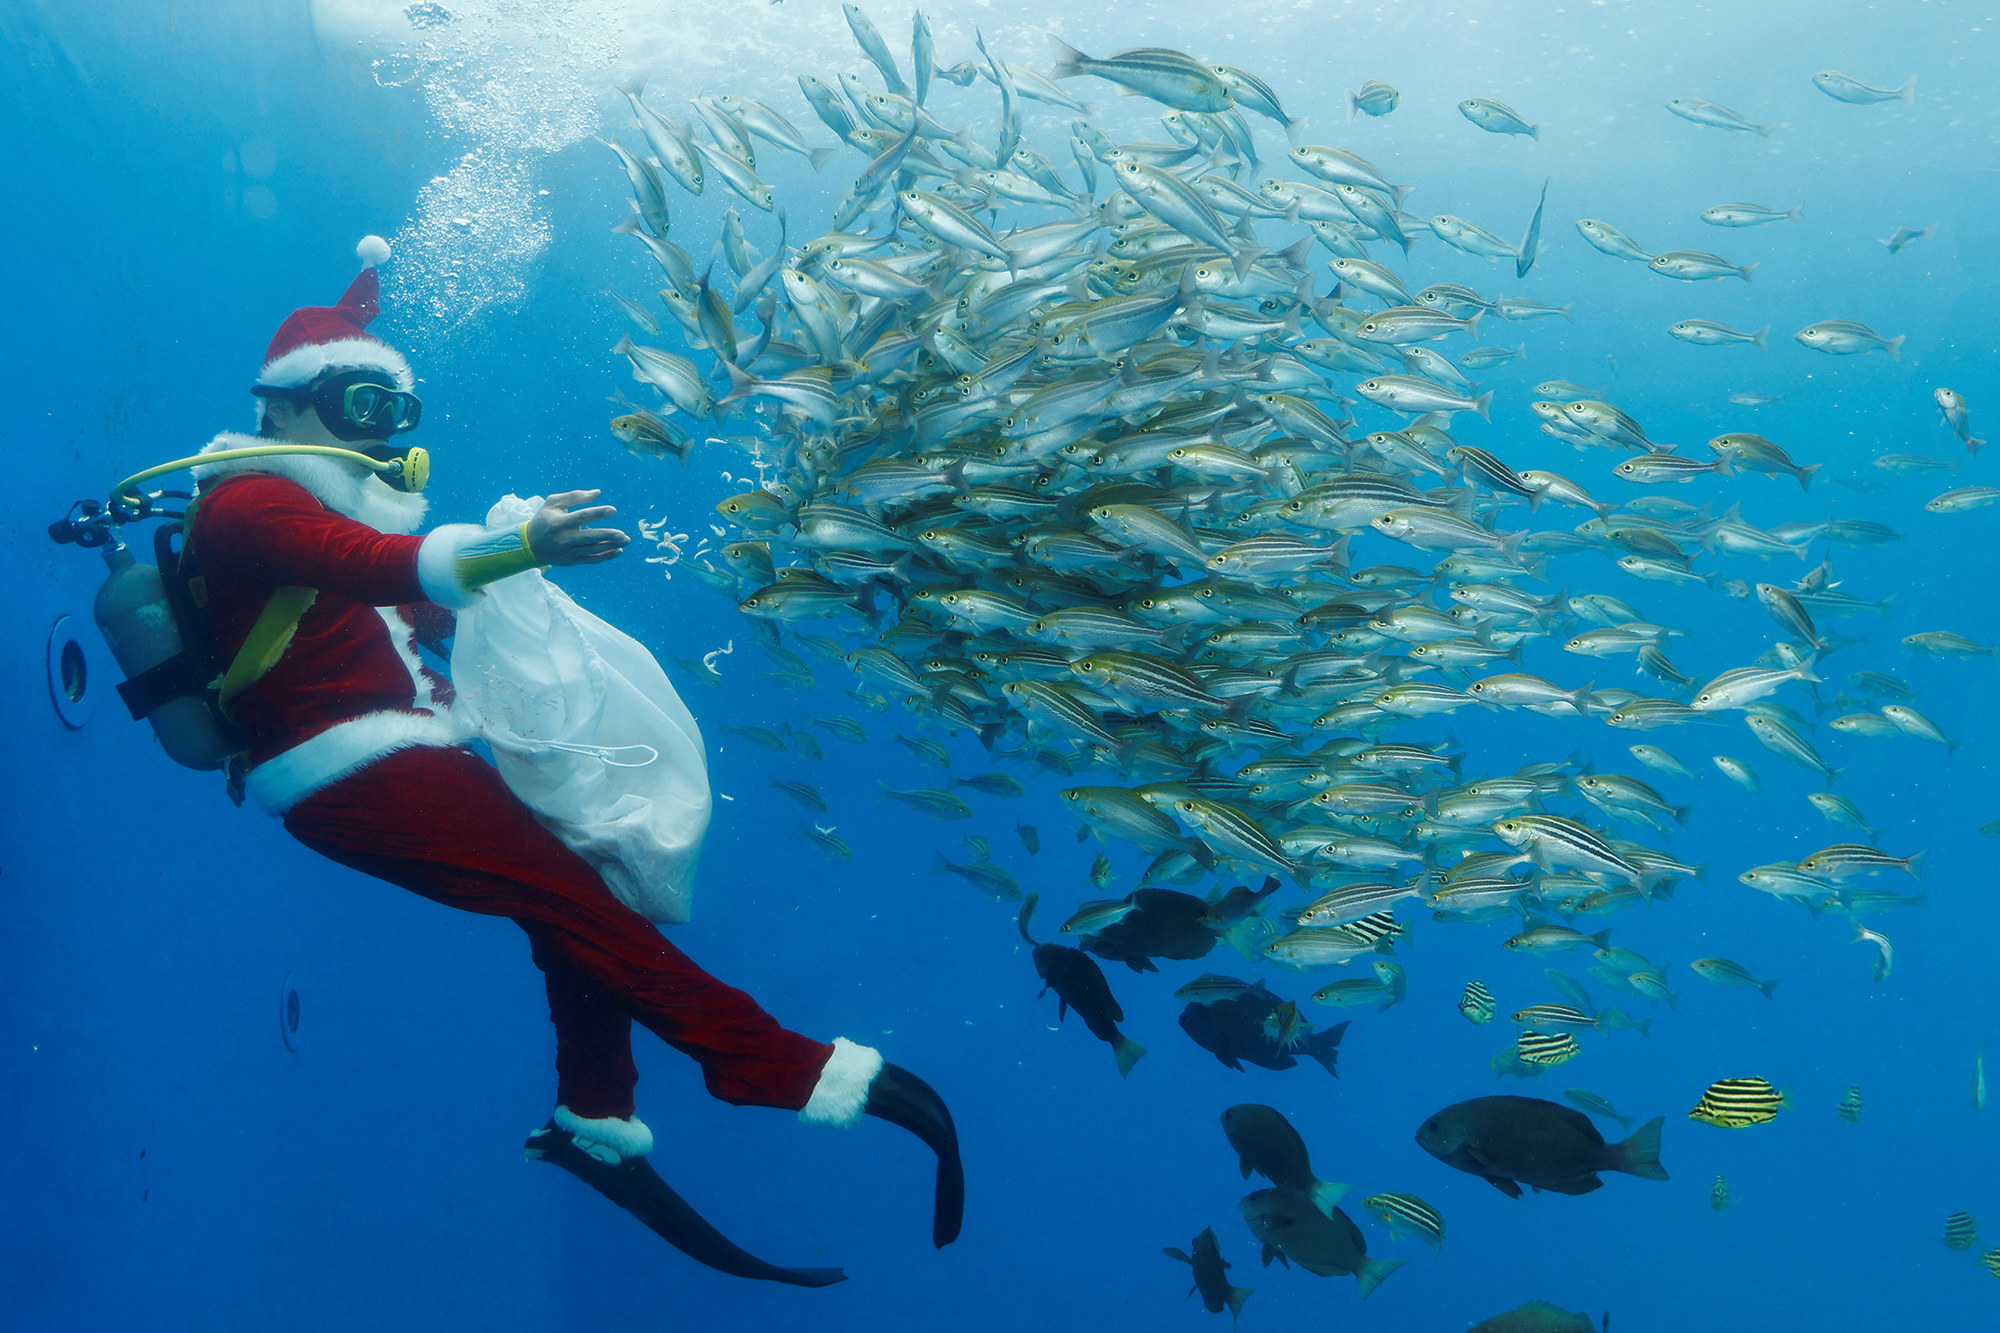 a scuba diver in a santa costume feeds a school of fish underwater